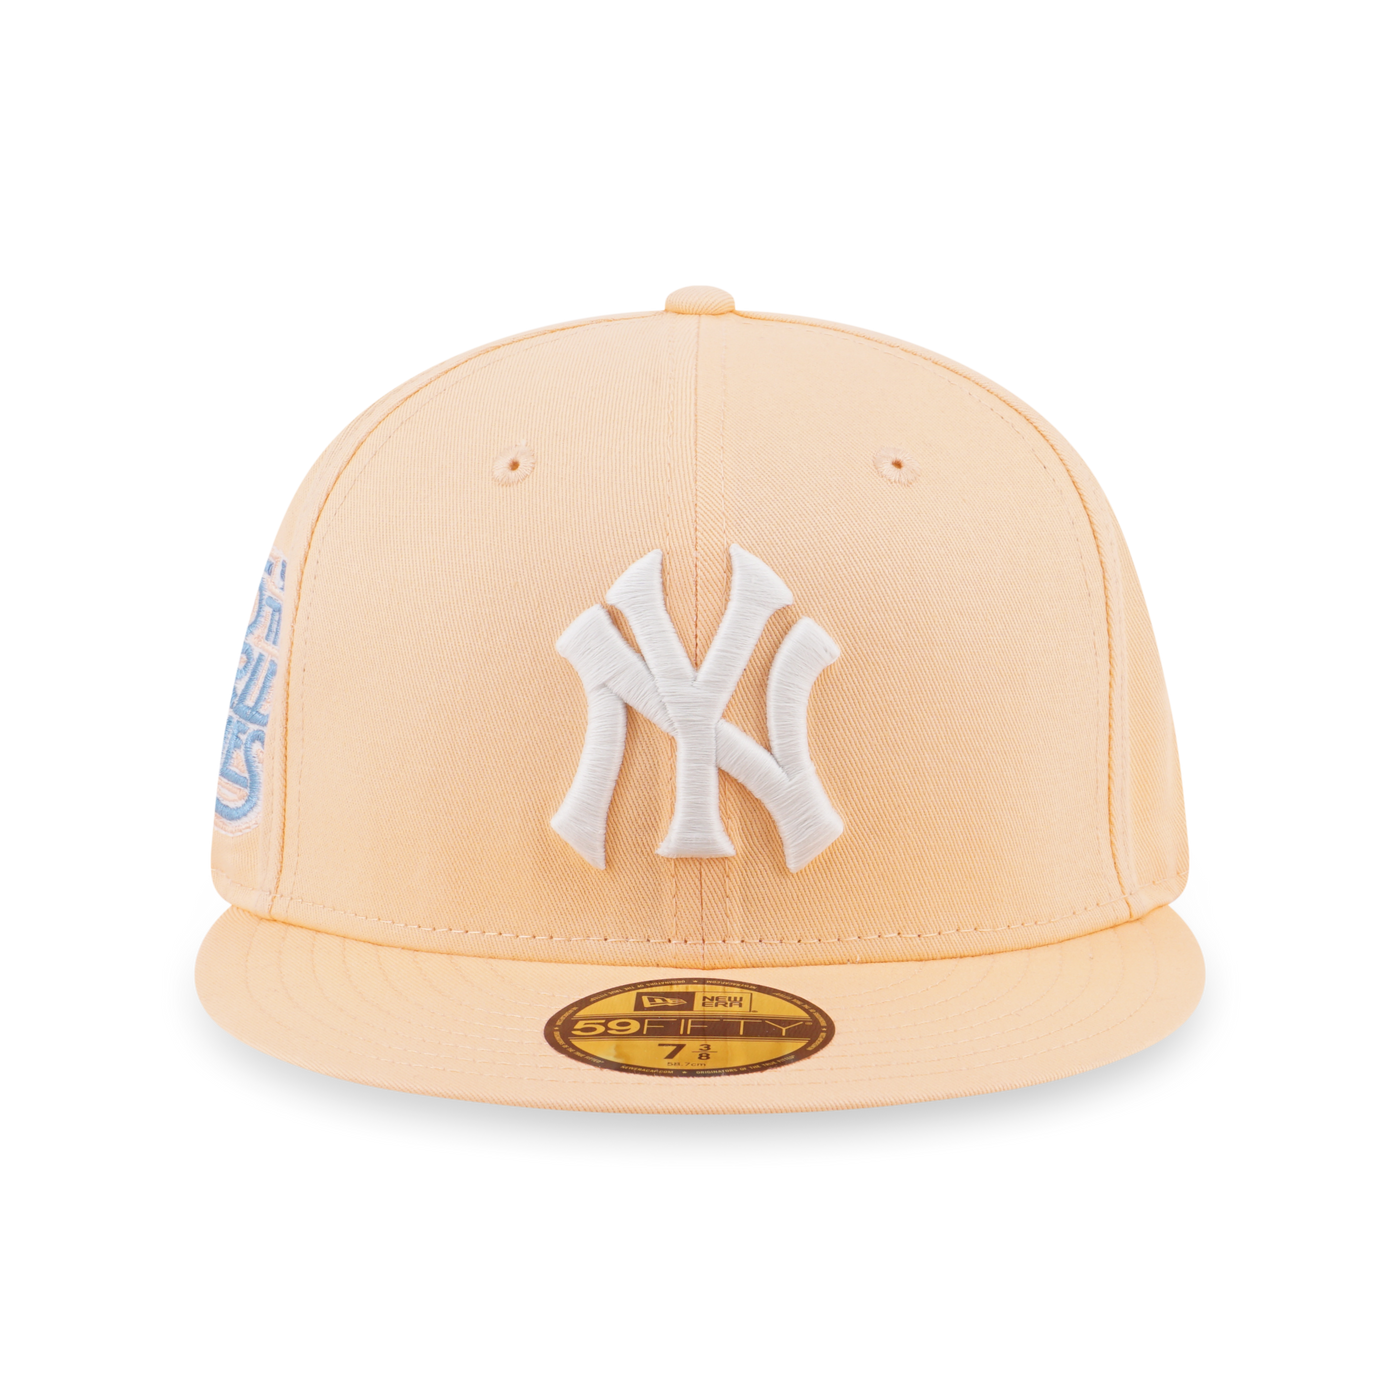 NEW YORK YANKEES 59FIFTY PACK - SUGAR SHACK PASTEL ORANGE 59FIFTY CAP